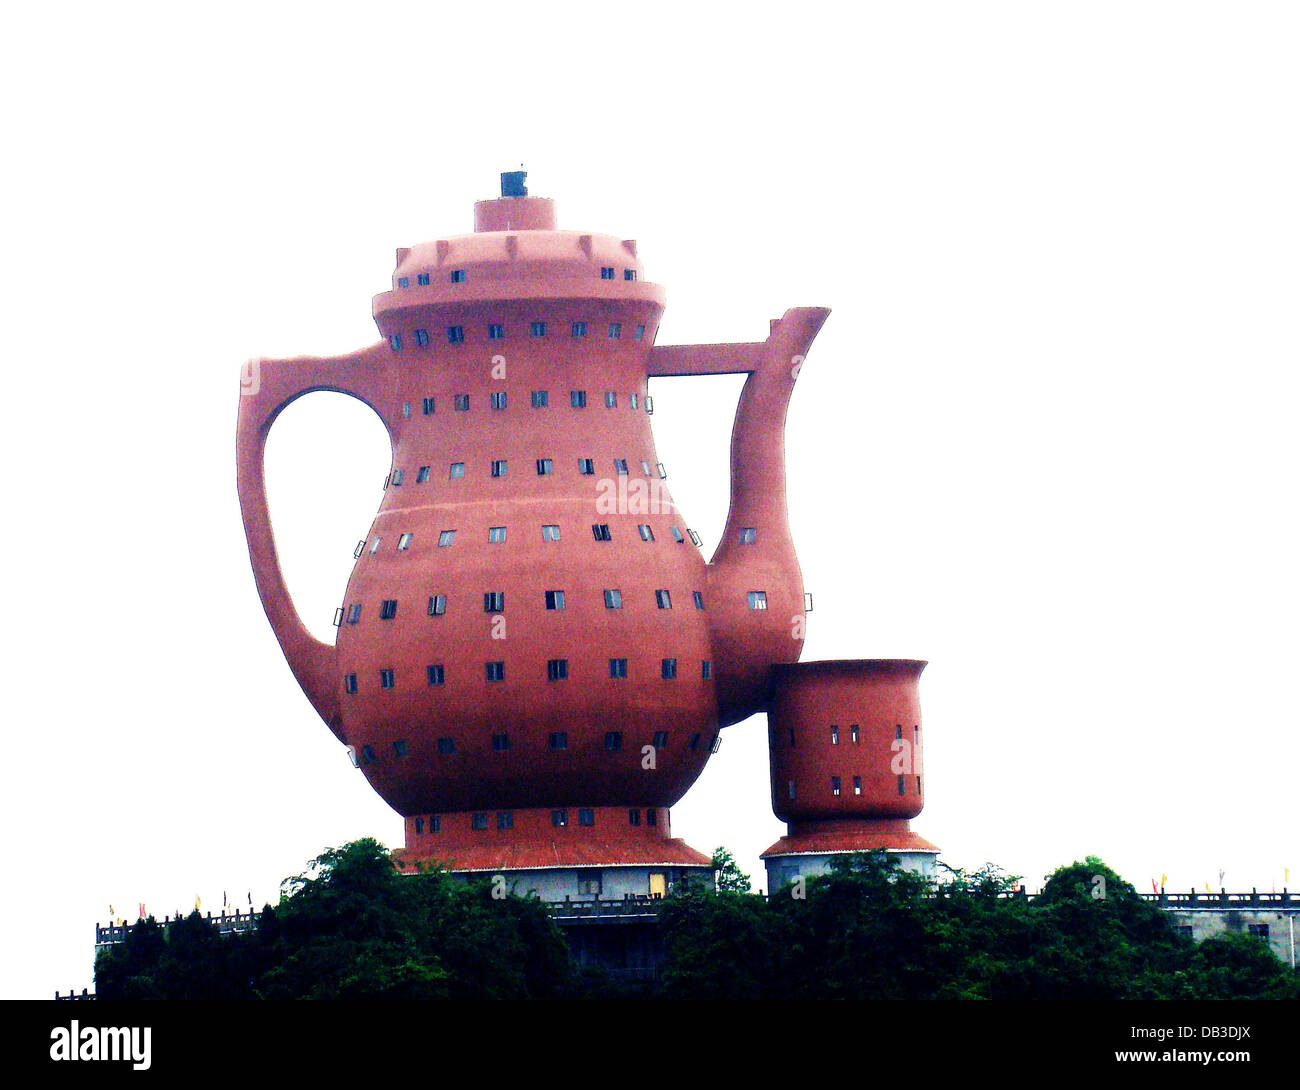 https://c8.alamy.com/comp/DB3DJX/giant-teapot-a-giant-tea-pot-is-opened-in-meitan-countys-lawrence-DB3DJX.jpg